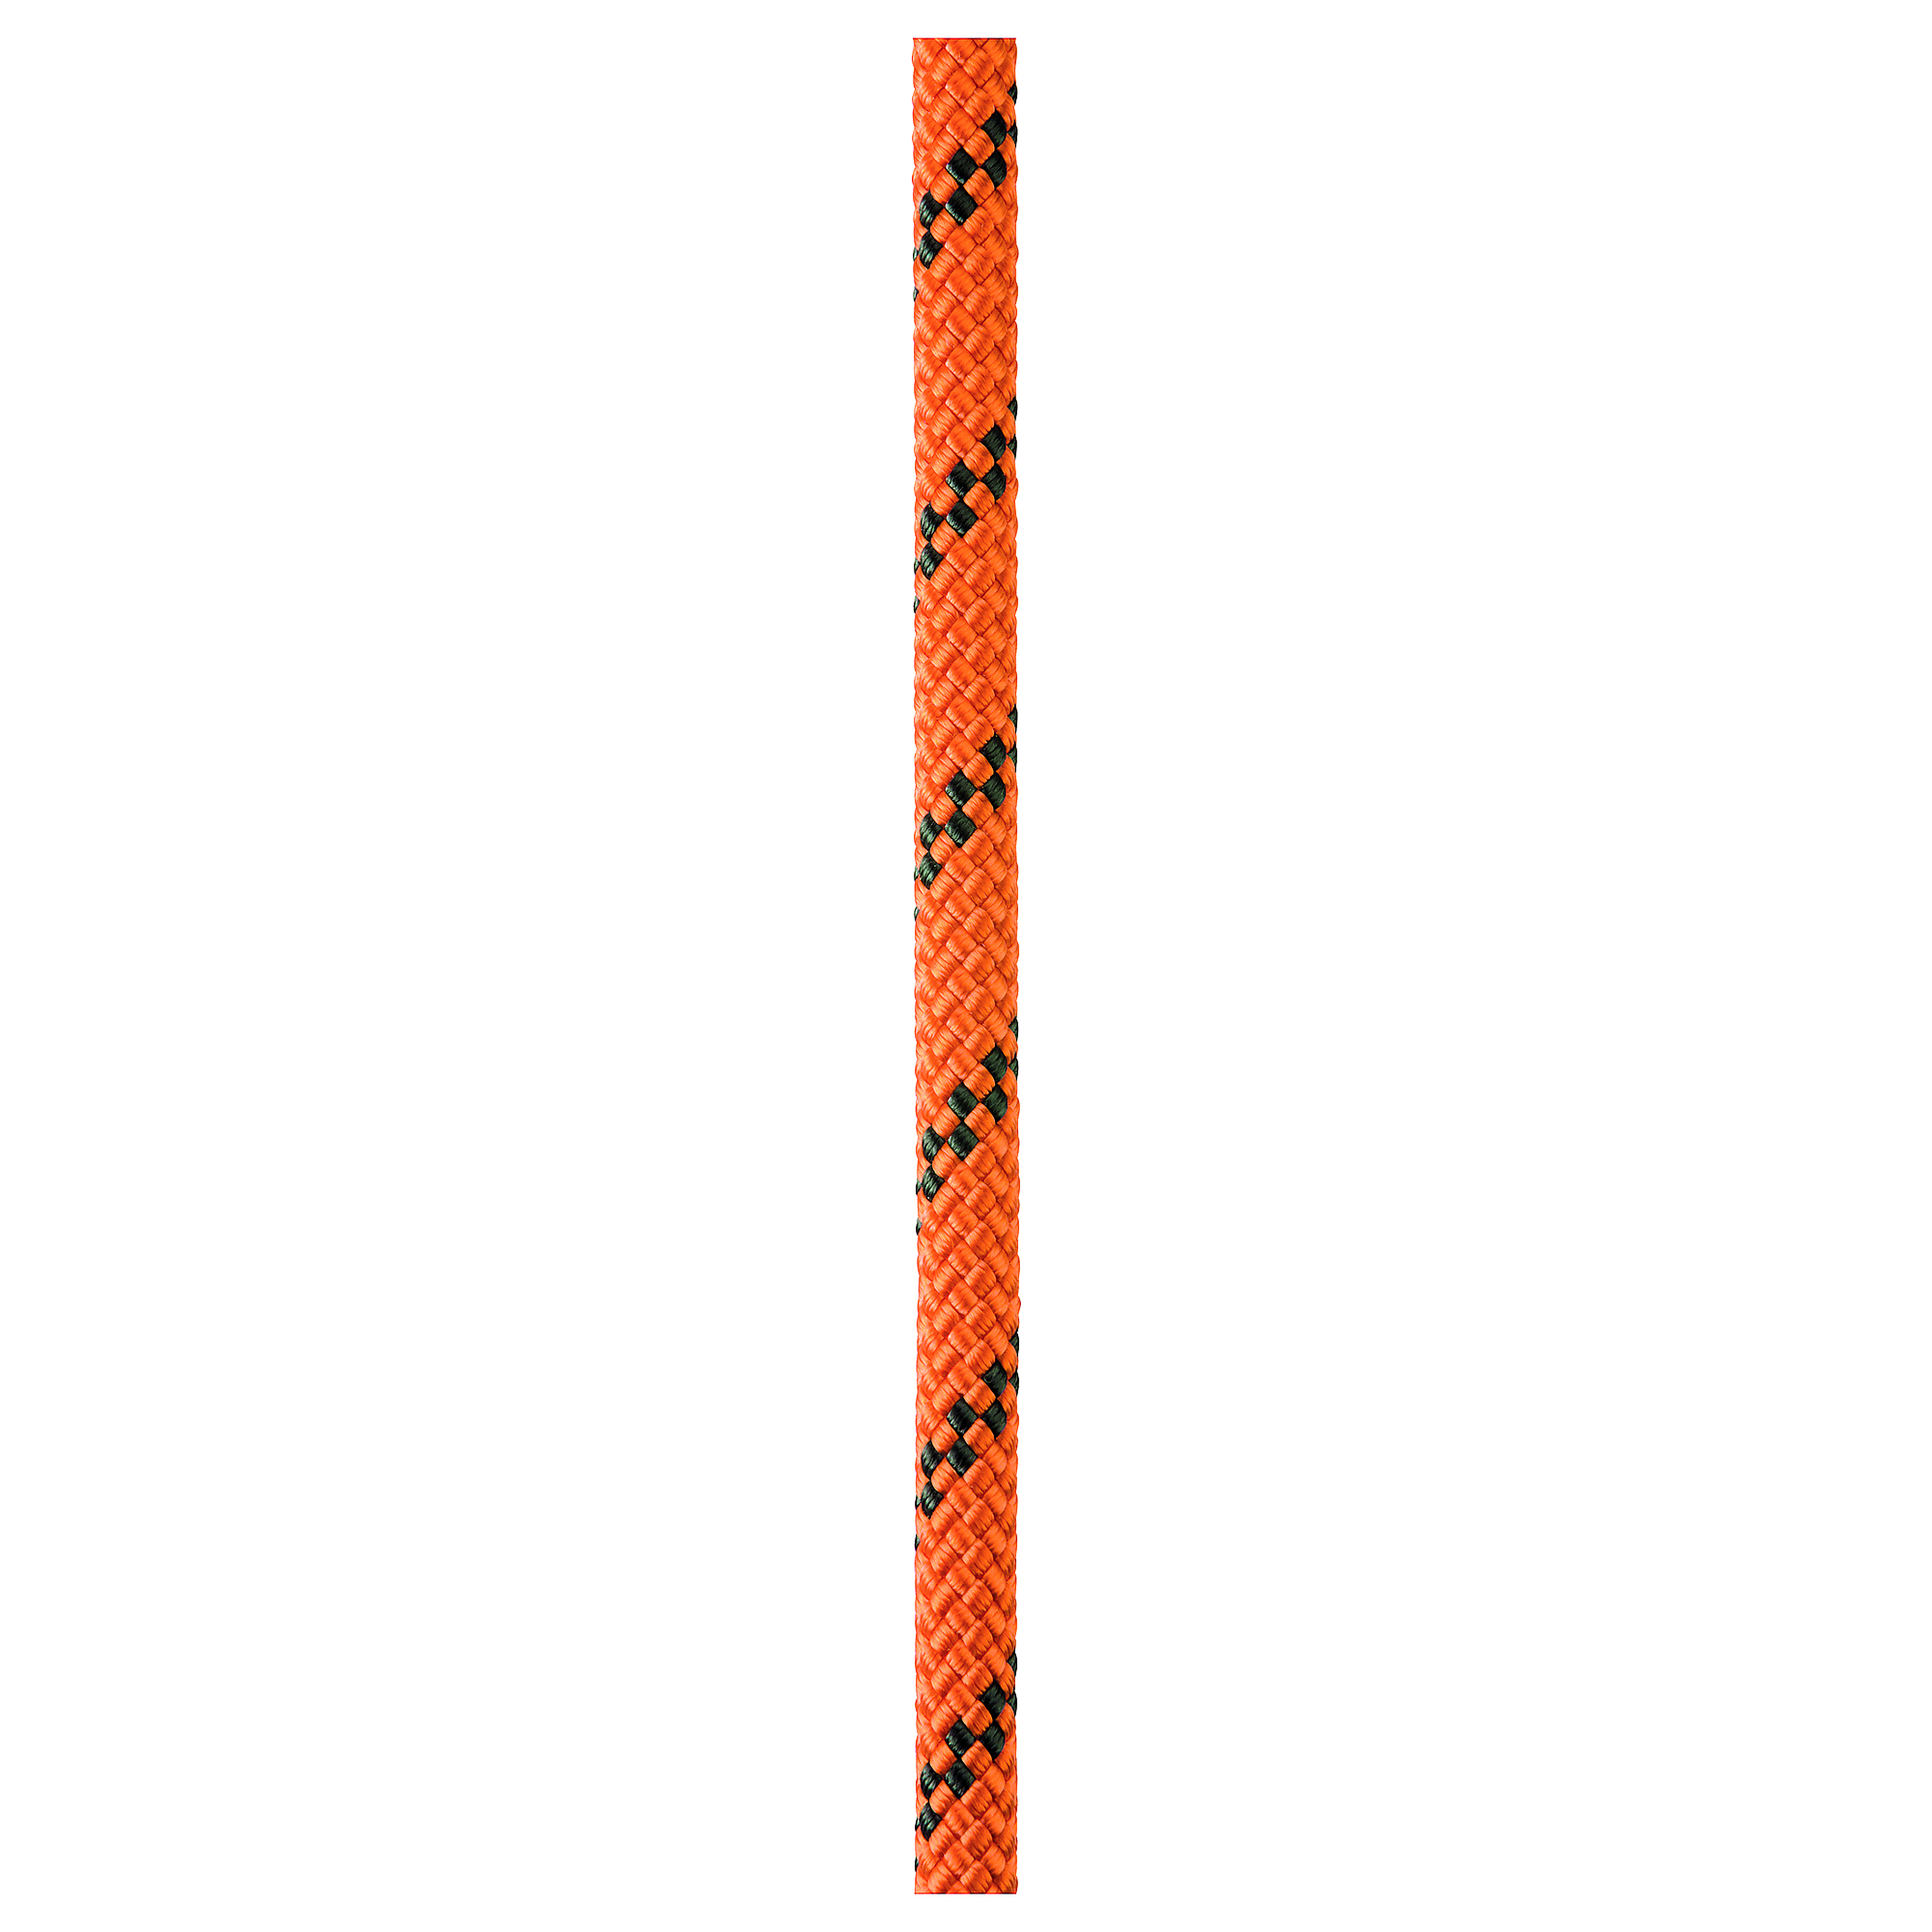 Petzl, AXIS rope 11mm 600ft. orange NFPA, Model R074AA20